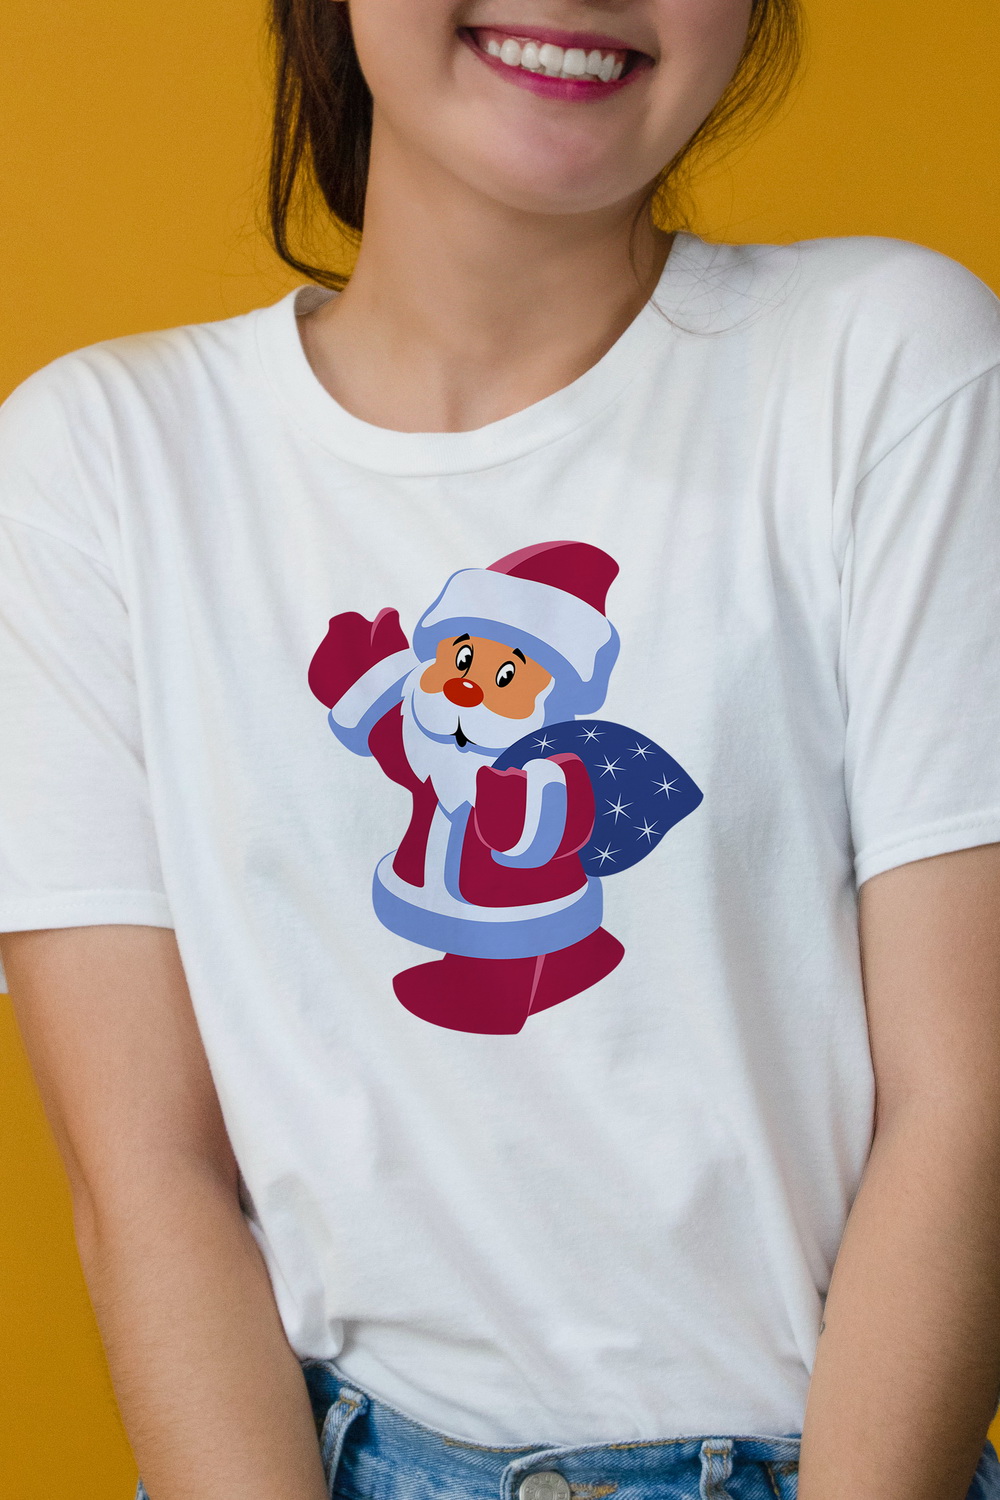 Santa Claus with Christmas Bag Graphics Design pinterest image.